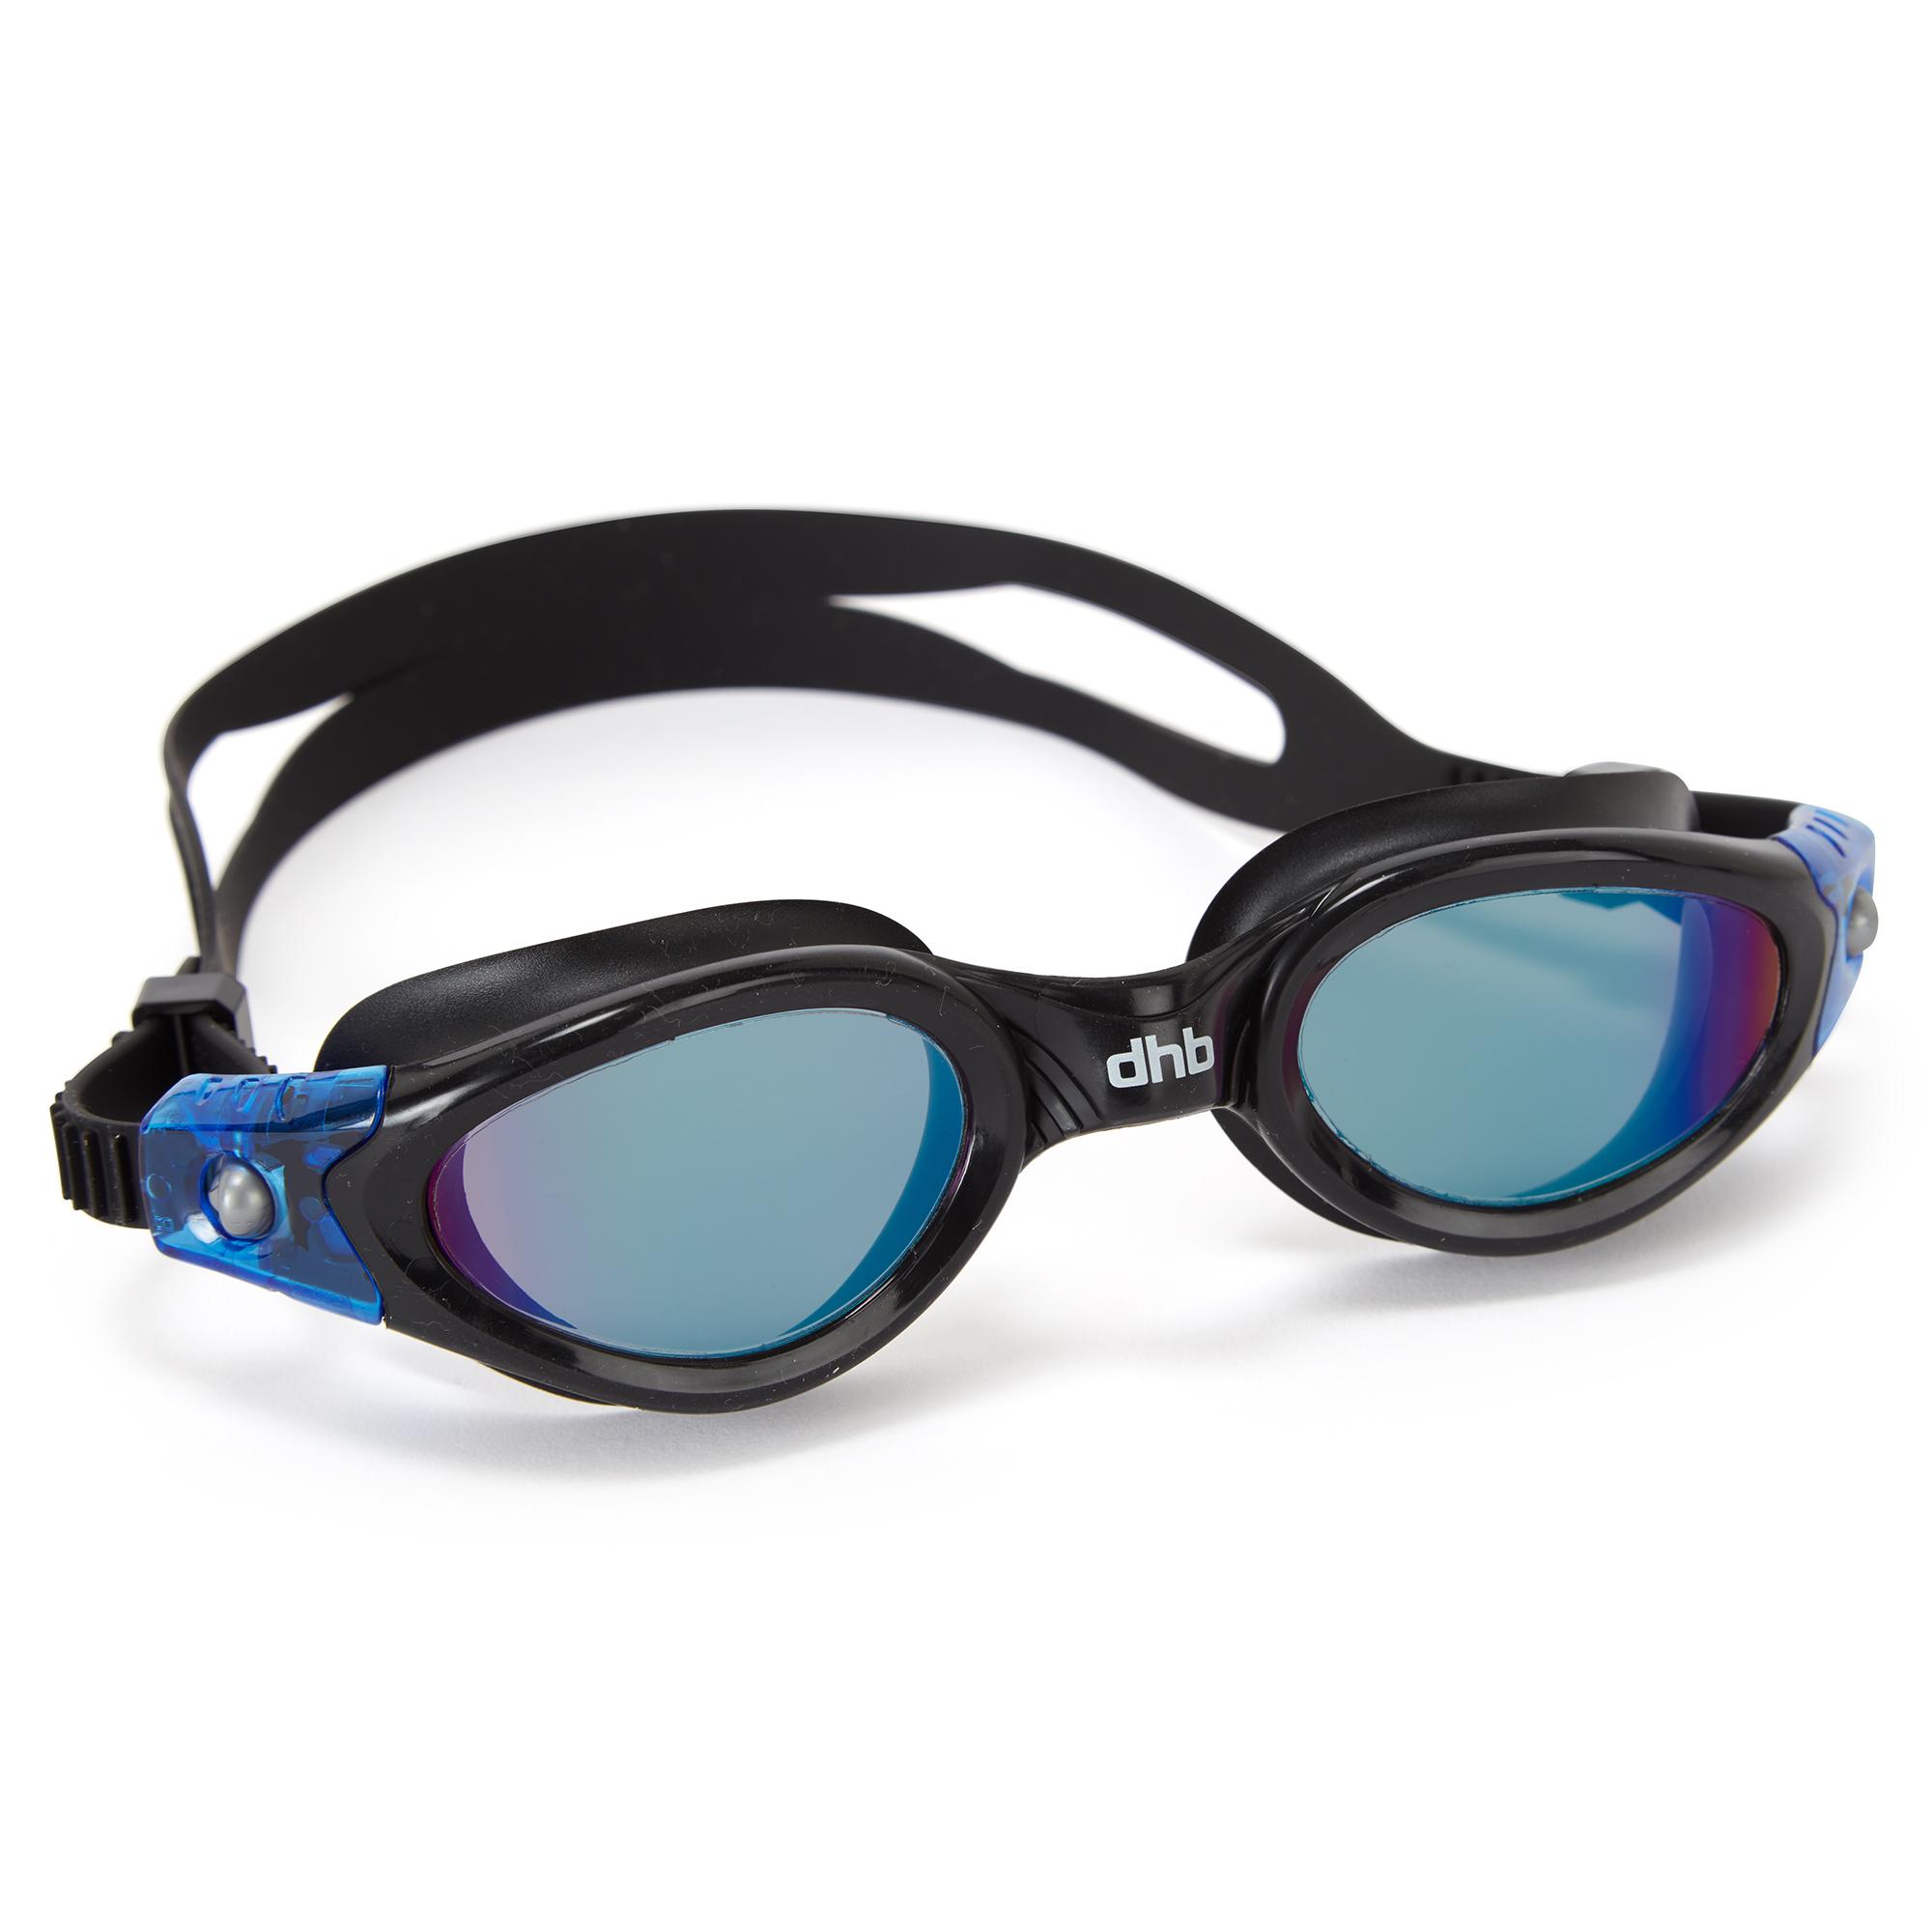 Dhb Hydron Goggles - Mirror - Black/blue